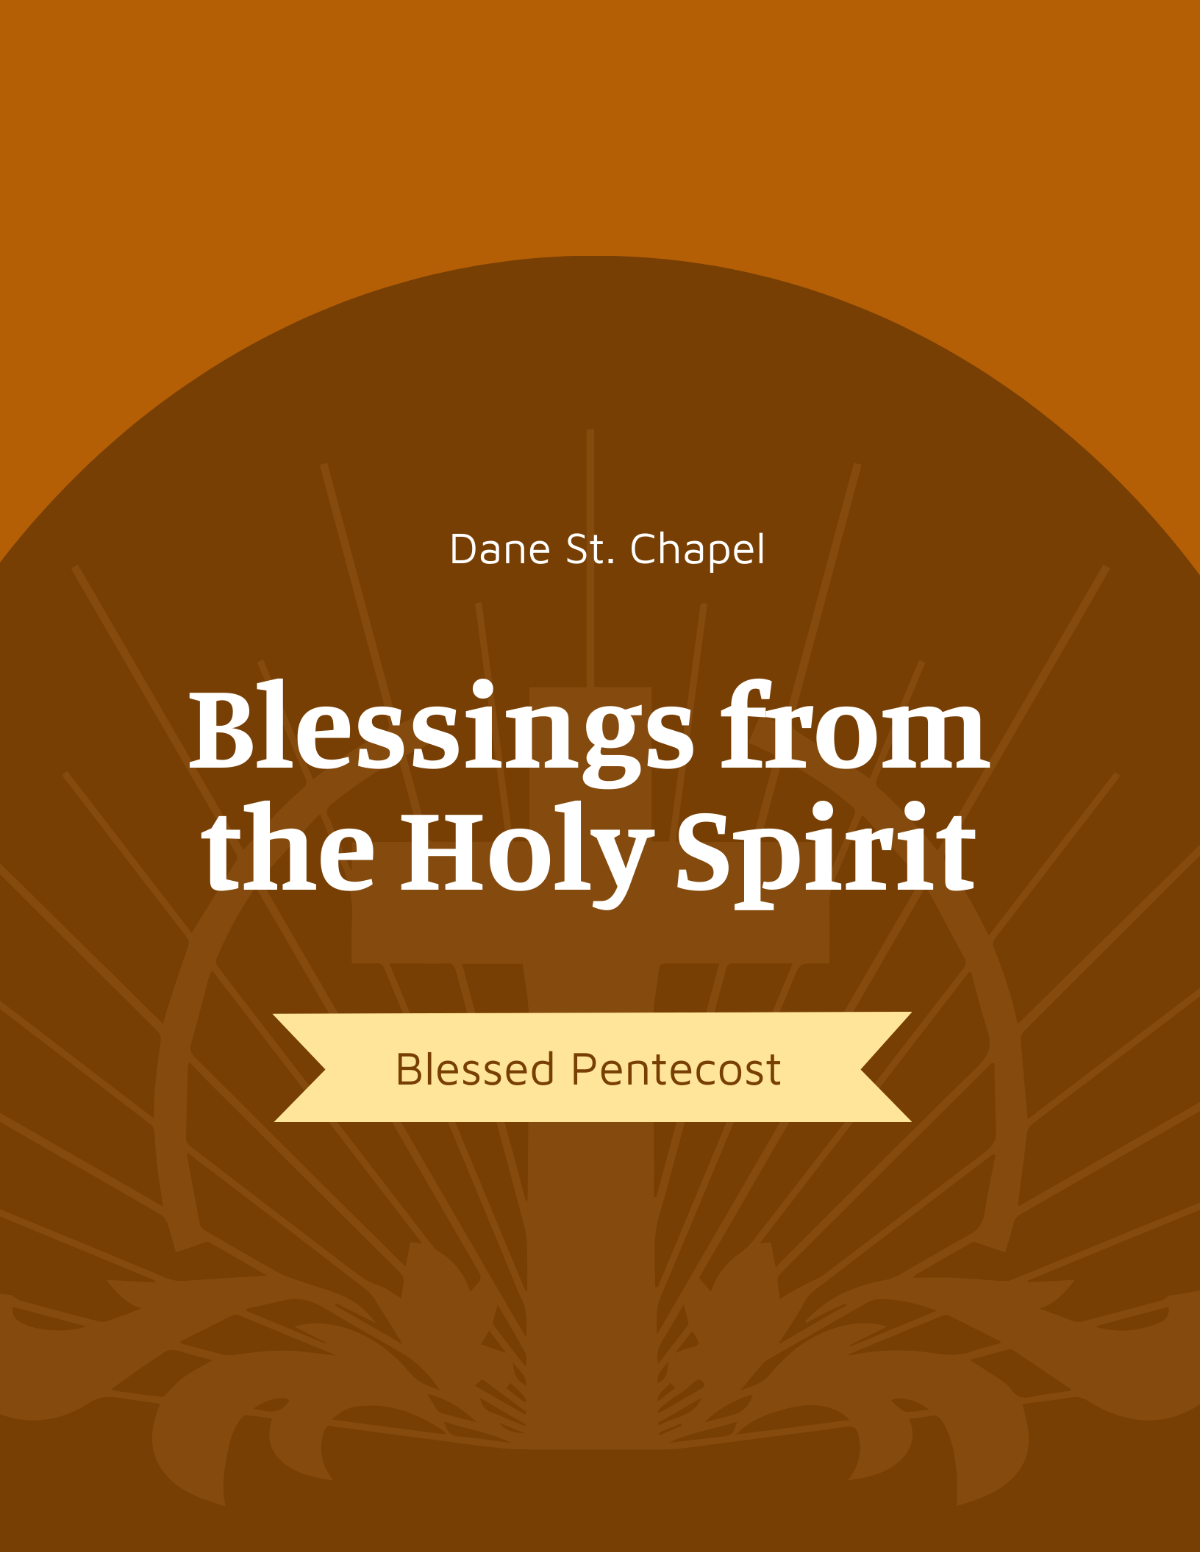 Pentecost Sunday Church Flyer